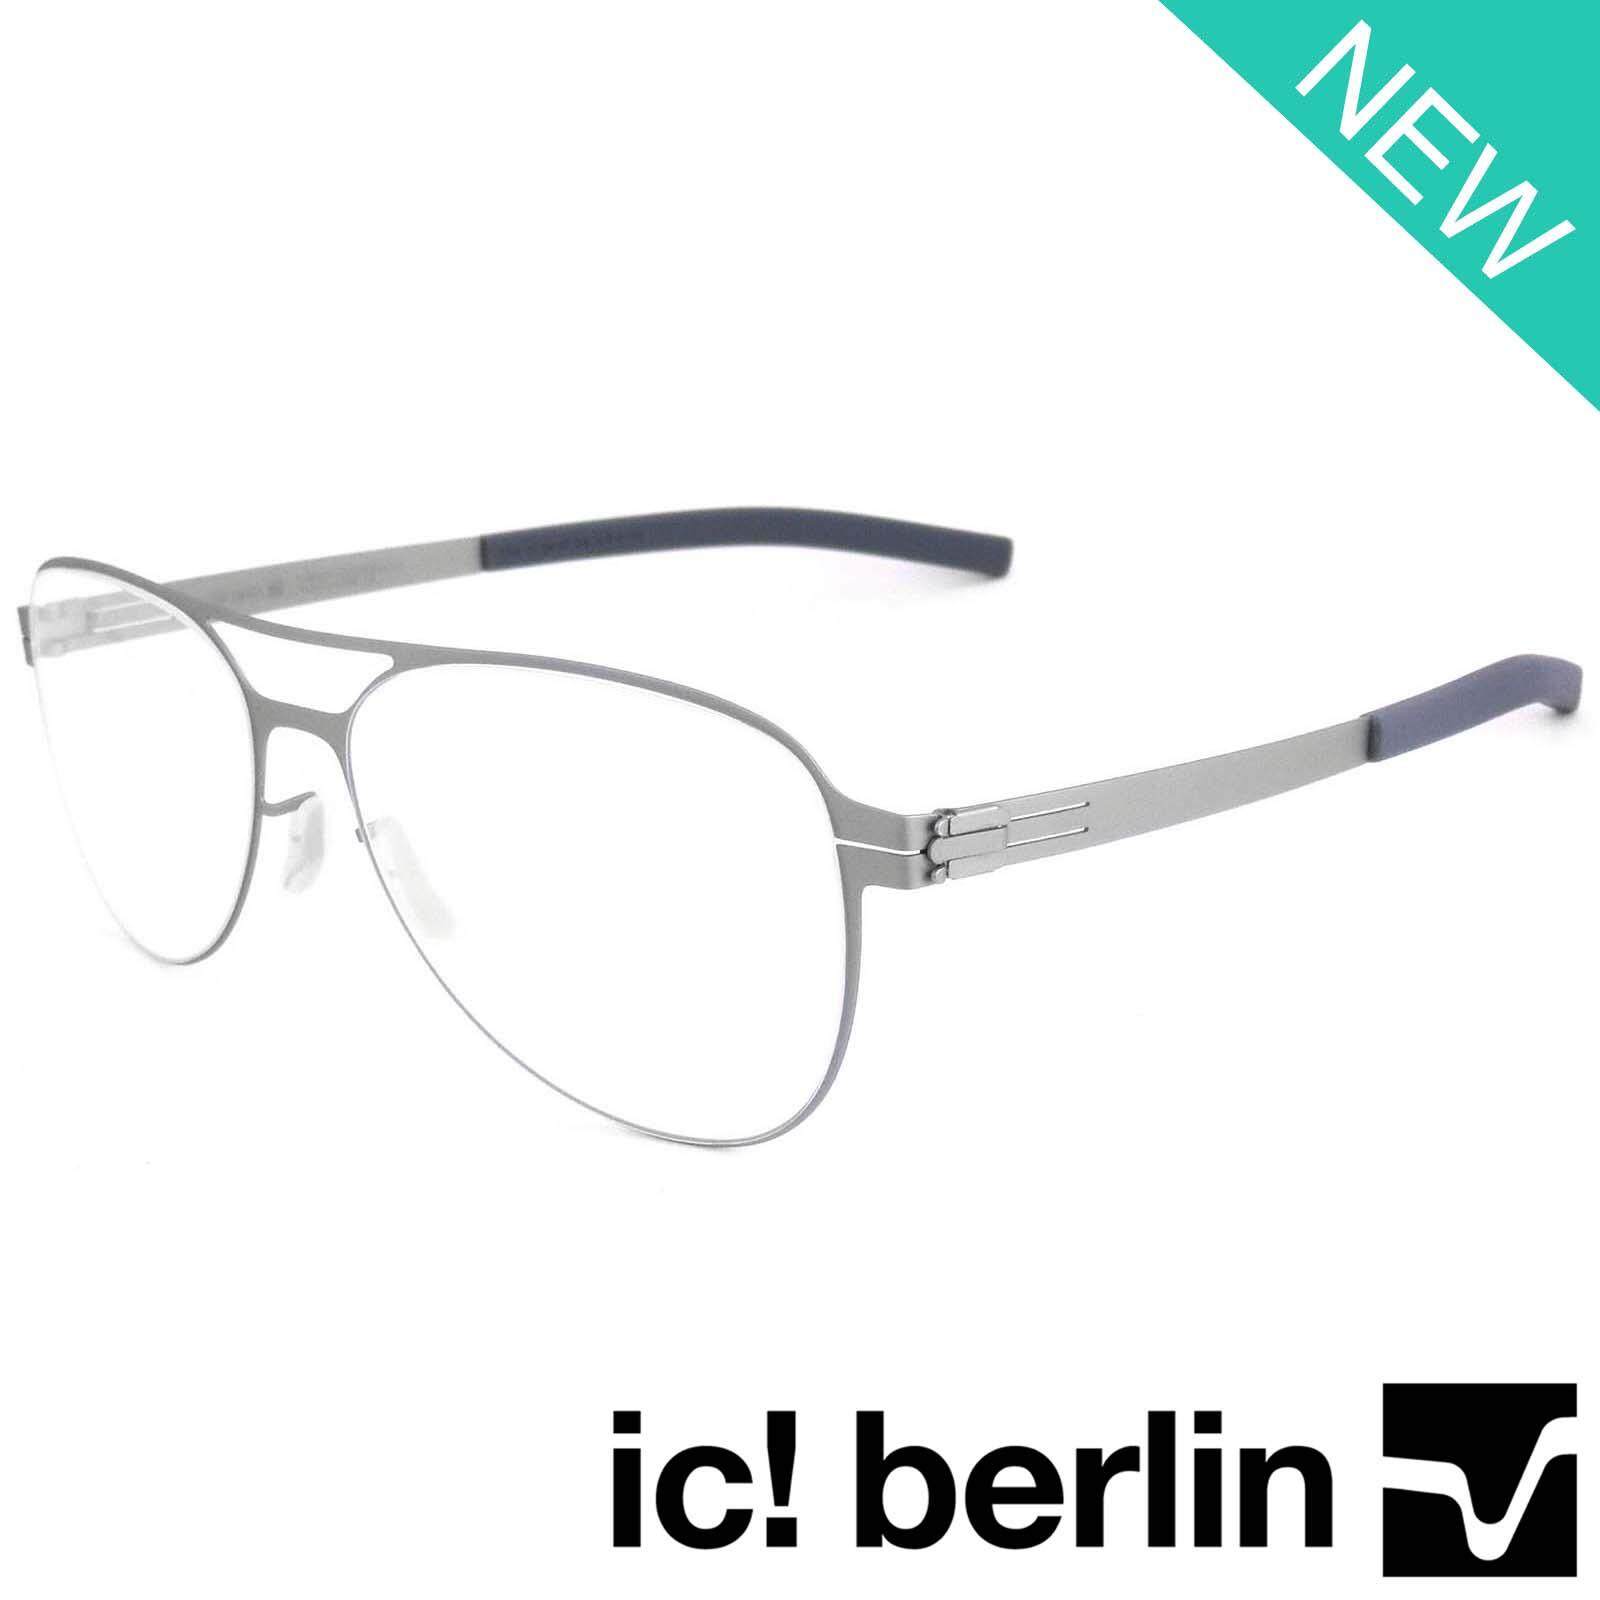 Ic Berlin แว่นตารุ่น 014 C-3 สีเงิน กรอบเต็ม Pilot ทรงนักบิน ขาข้อต่อ ไม่ใช้น็อต วัสดุ สแตนเลส สตีล (สำหรับตัดเลนส์) Full frame Eyeglass leg joints Stainless Steel material Eyewear Top Glasses ทางร้านเรามีบริการรับตัดเลนส์